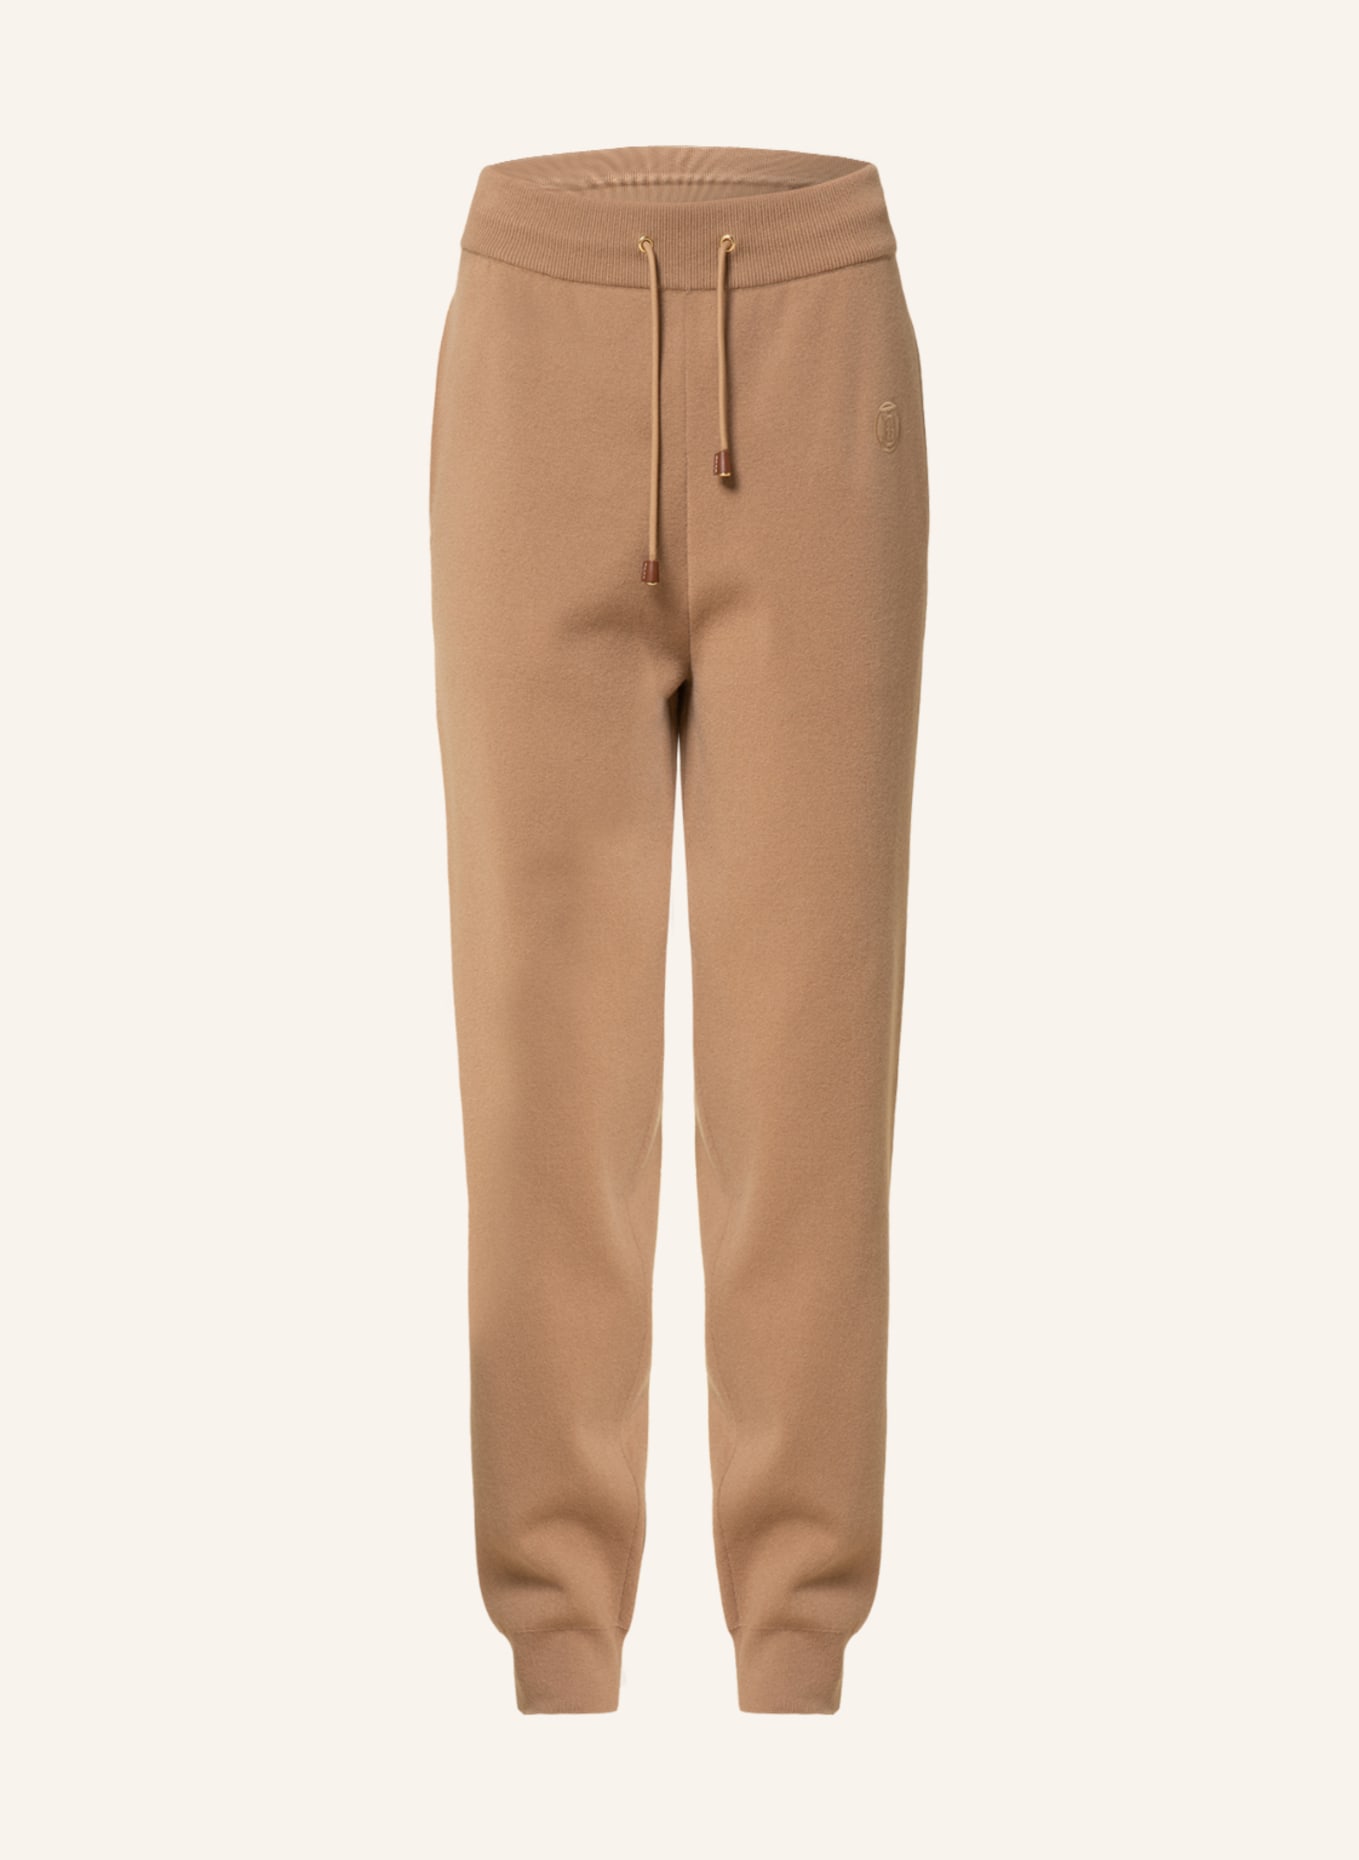 Burberry Womens Nova Check Wool Pants size US 6 Uk 8 100 wool  eBay